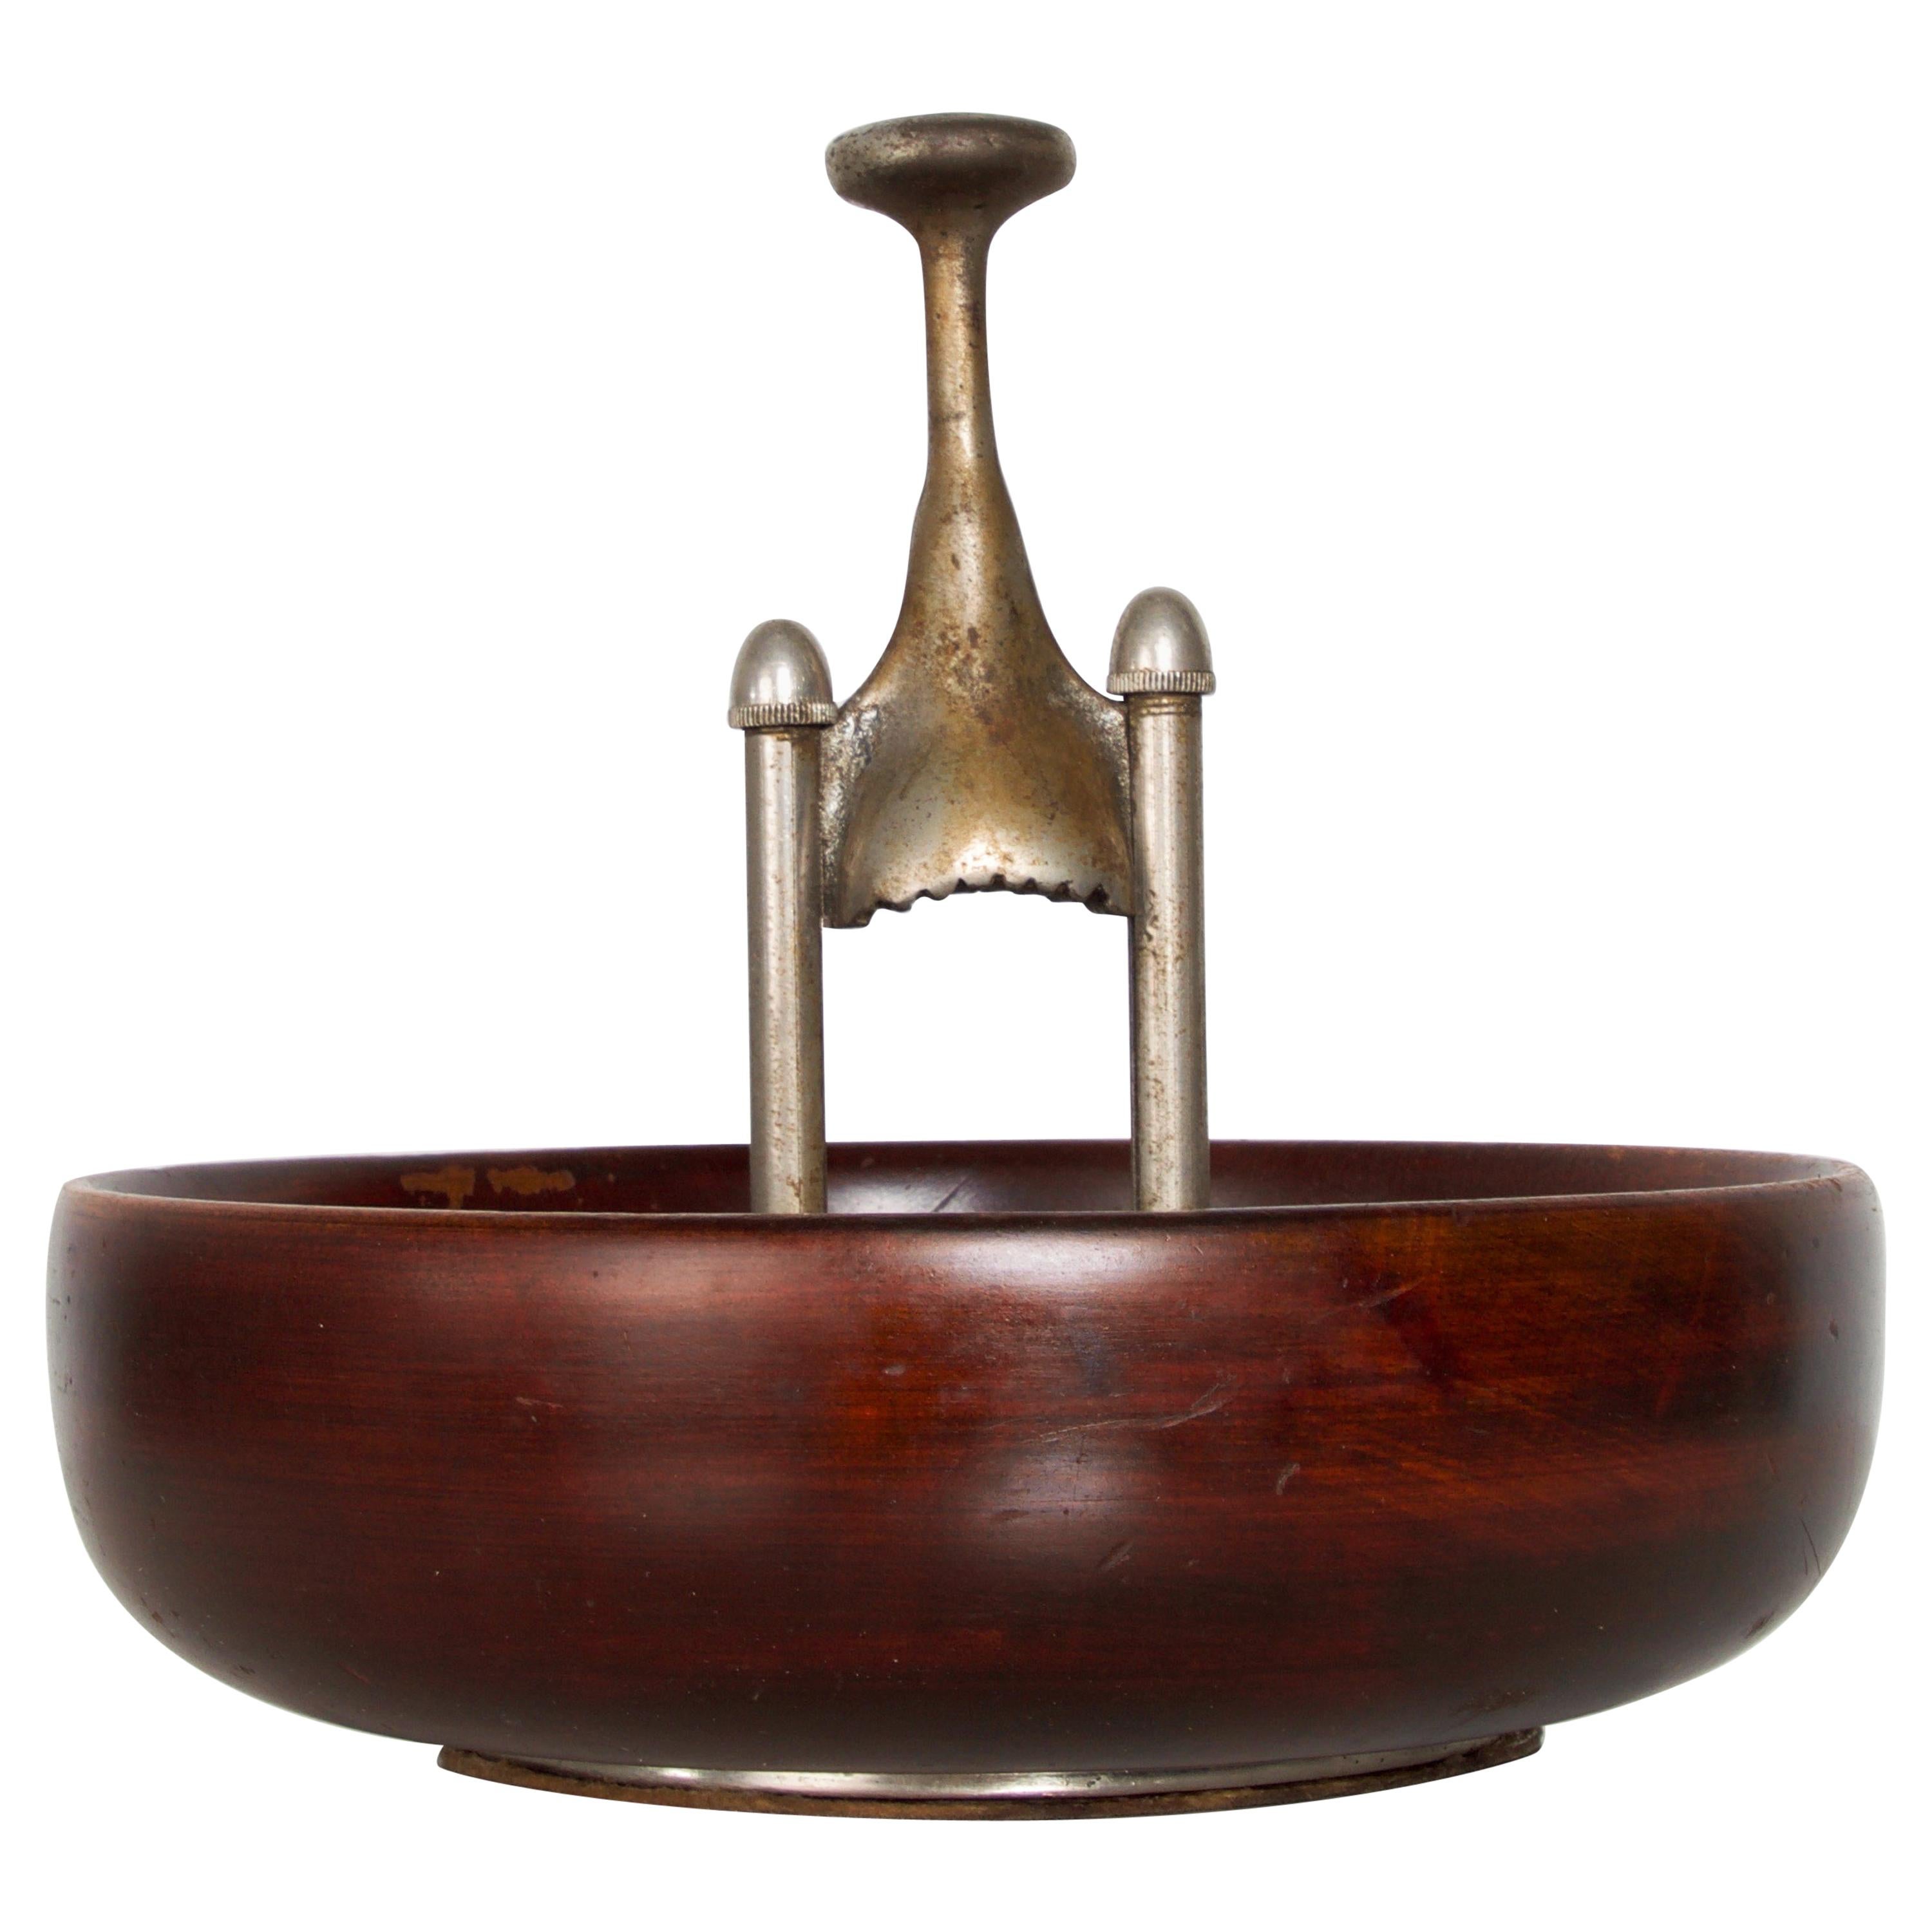 1960s Modernist Patent Design Elegant Wood Nut Bowl with Built in Nutcracker USA